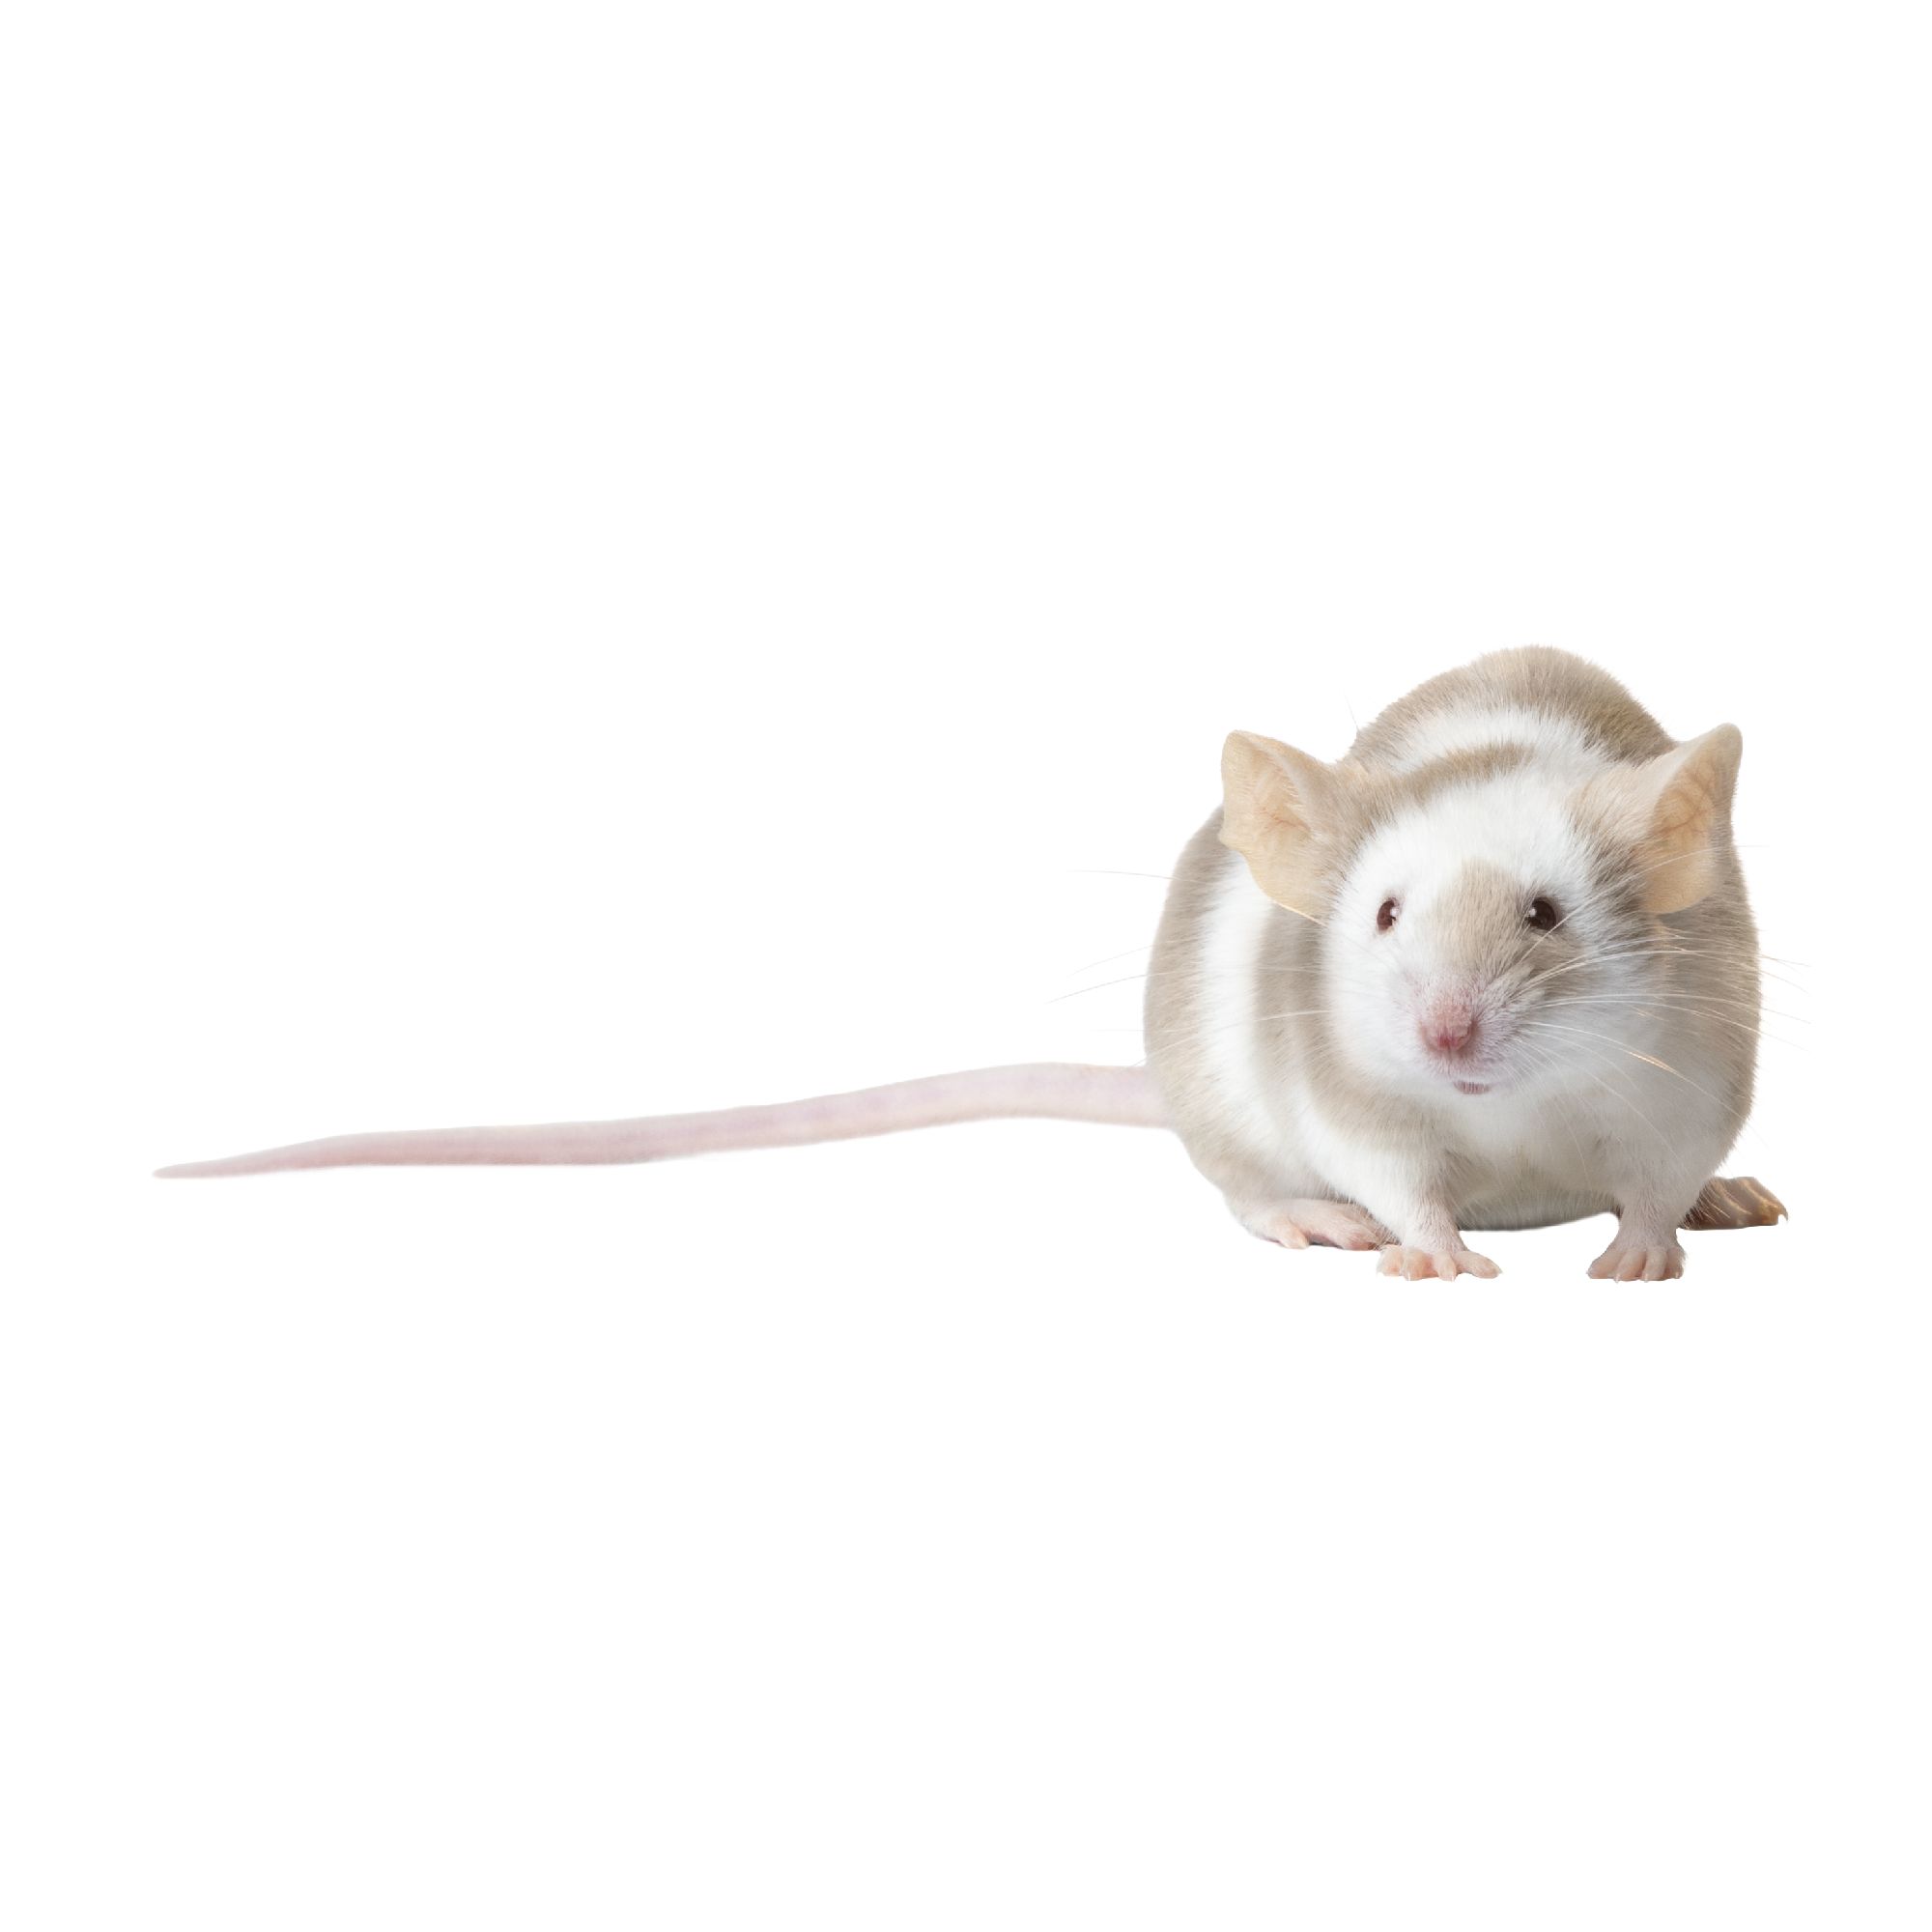 Female Fancy Mouse For Sale - Live Small Pets | PetSmart